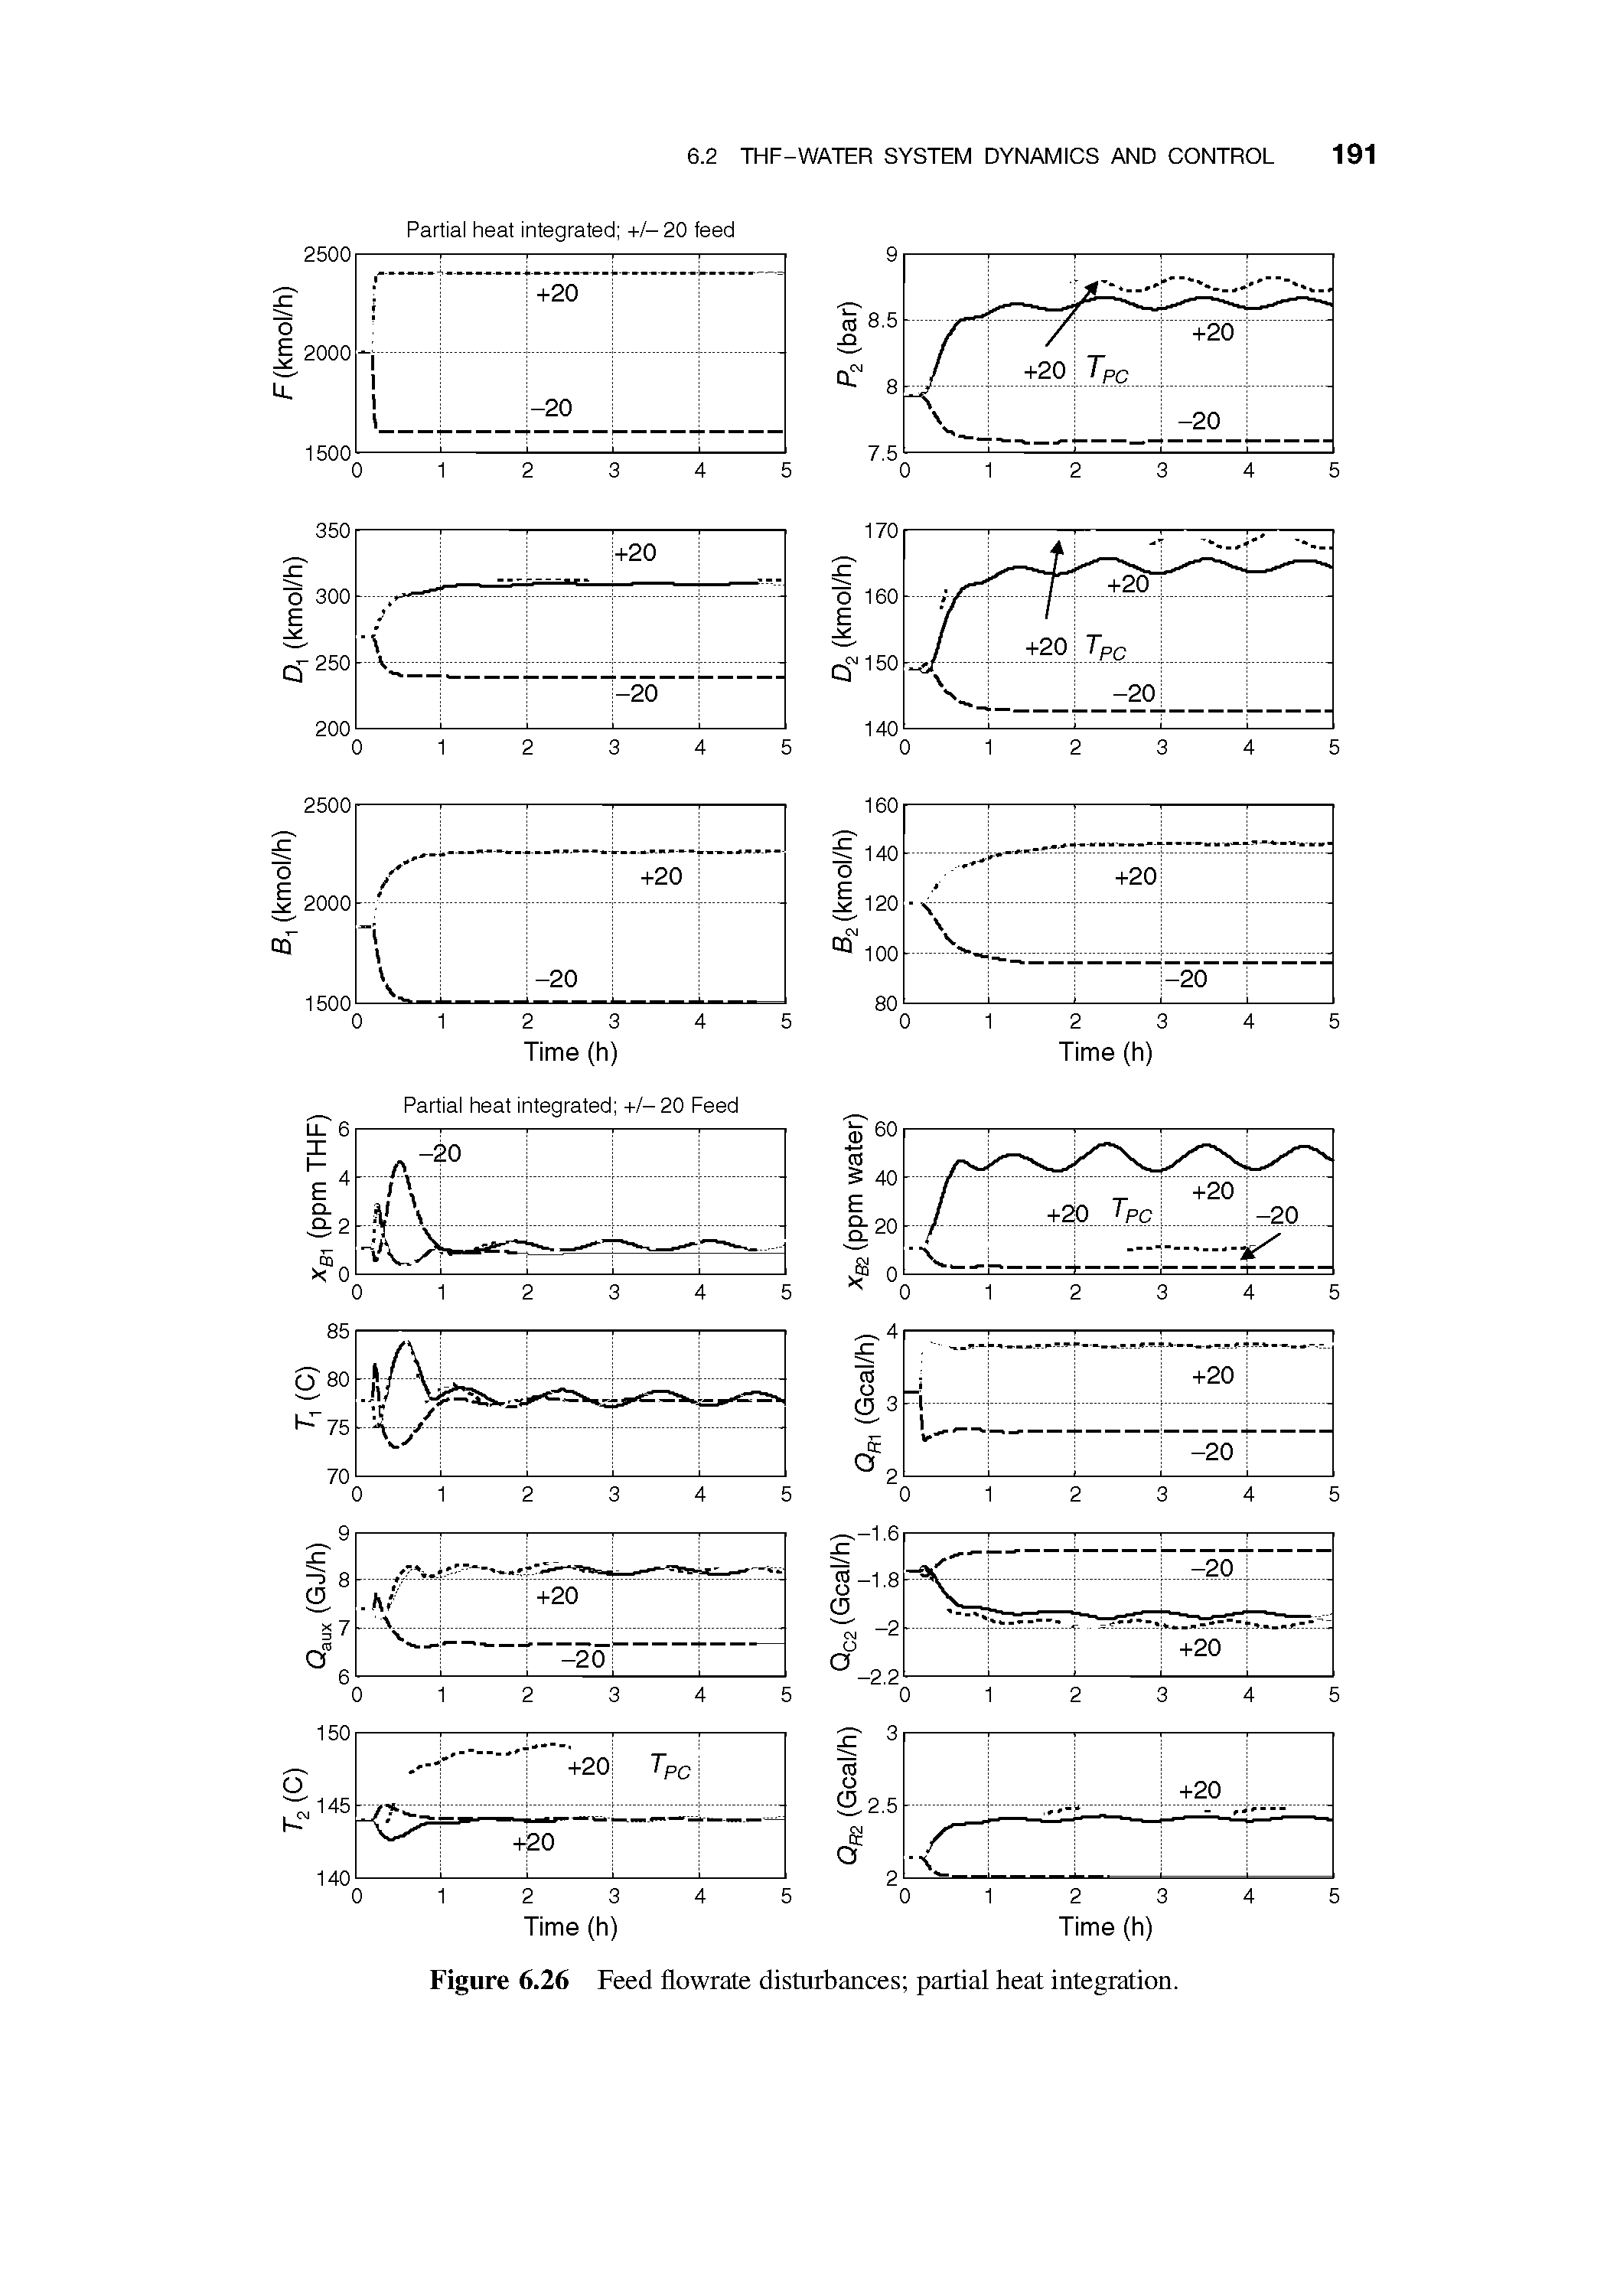 Figure 6.26 Feed flowrate disturbances partial heat integration.